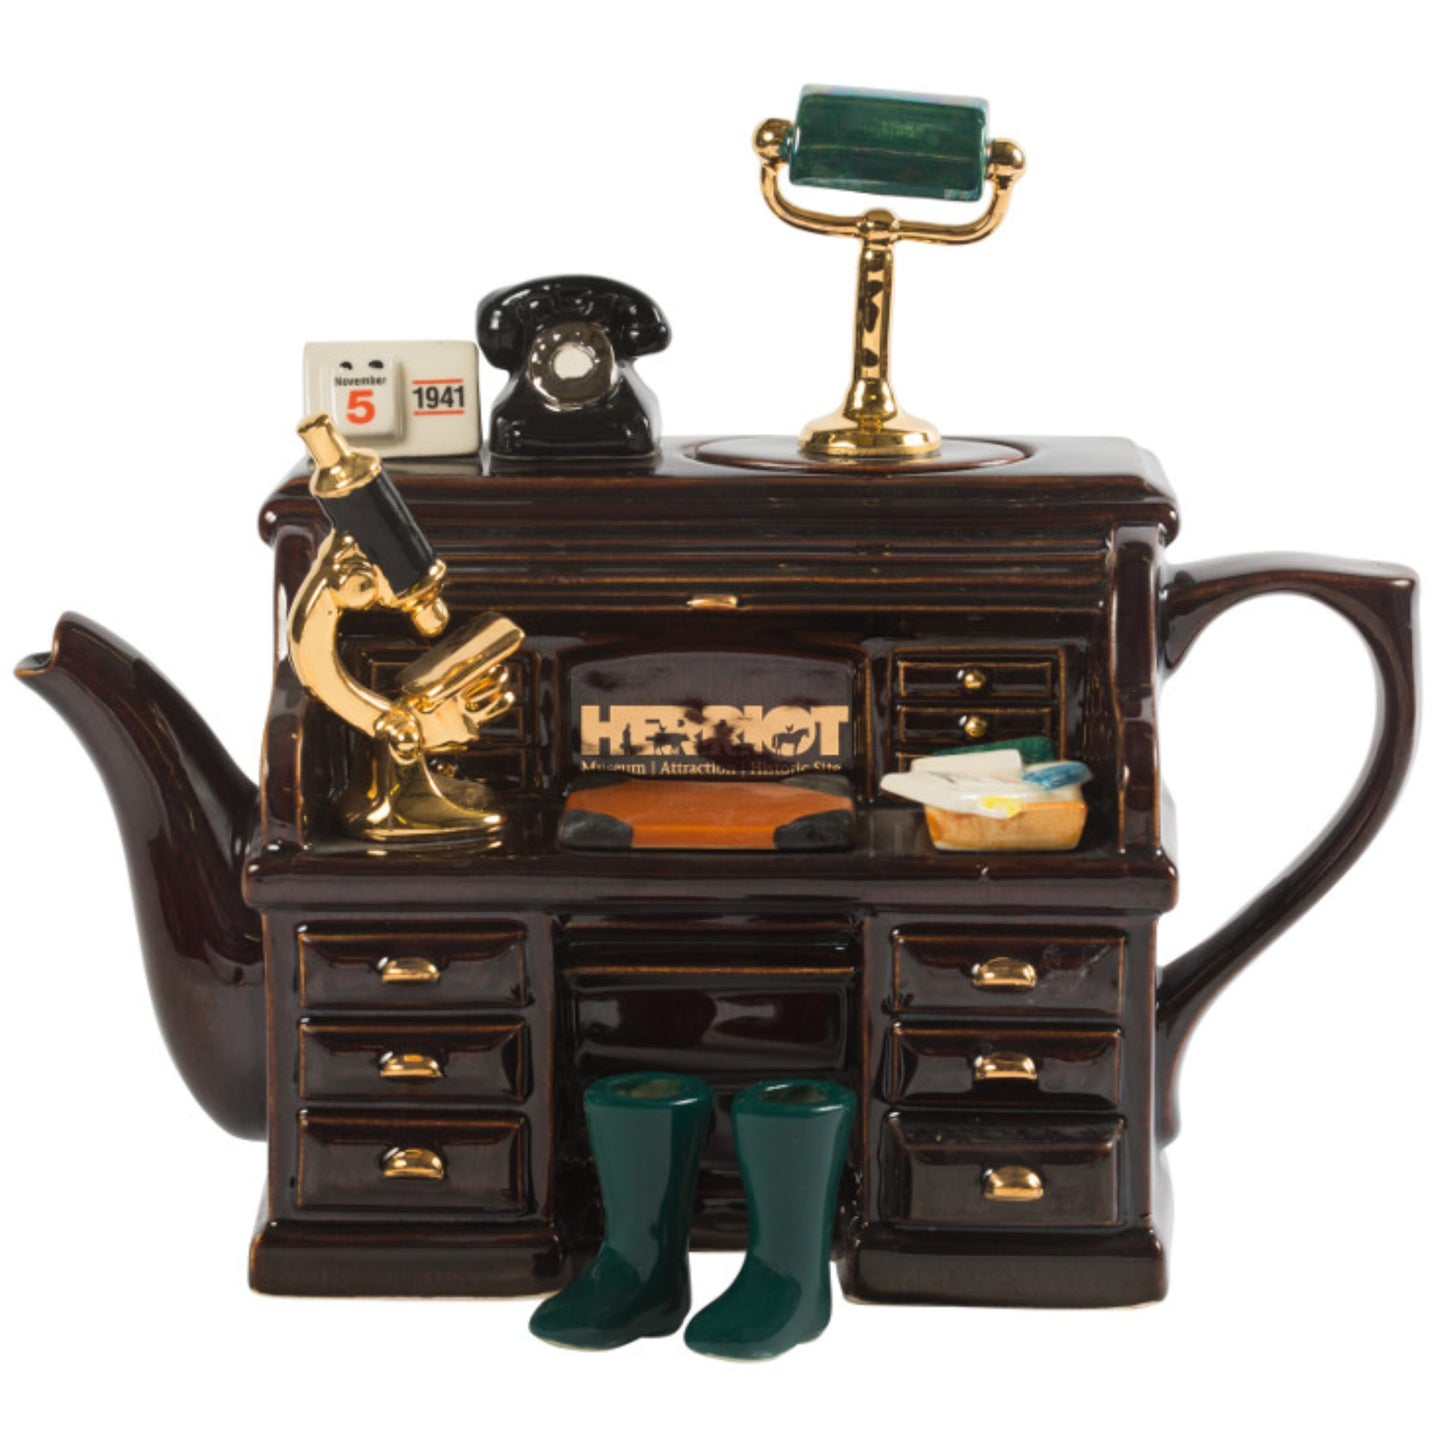 James Herriot Writing Desk Limited Edition Tea Pot - The Great Yorkshire Shop